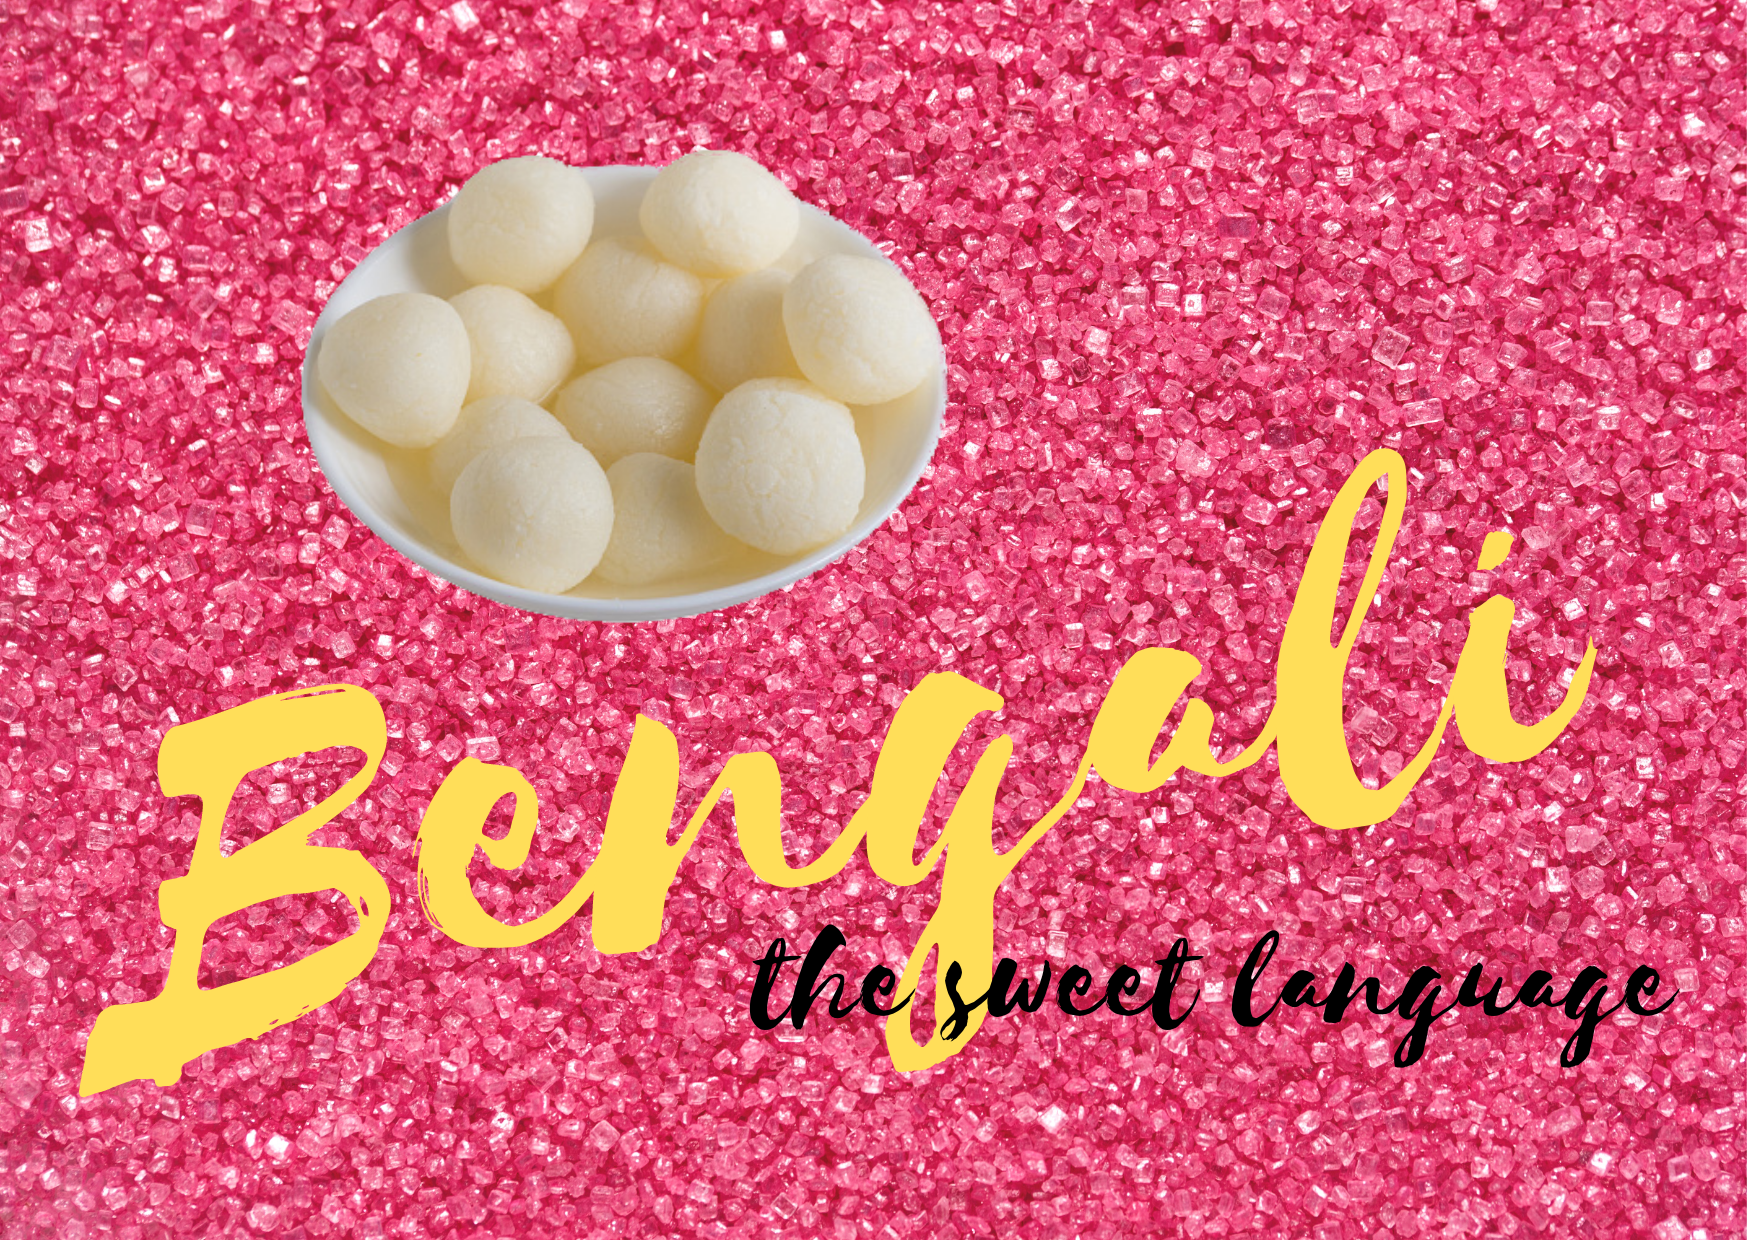 Bengali the sweet language